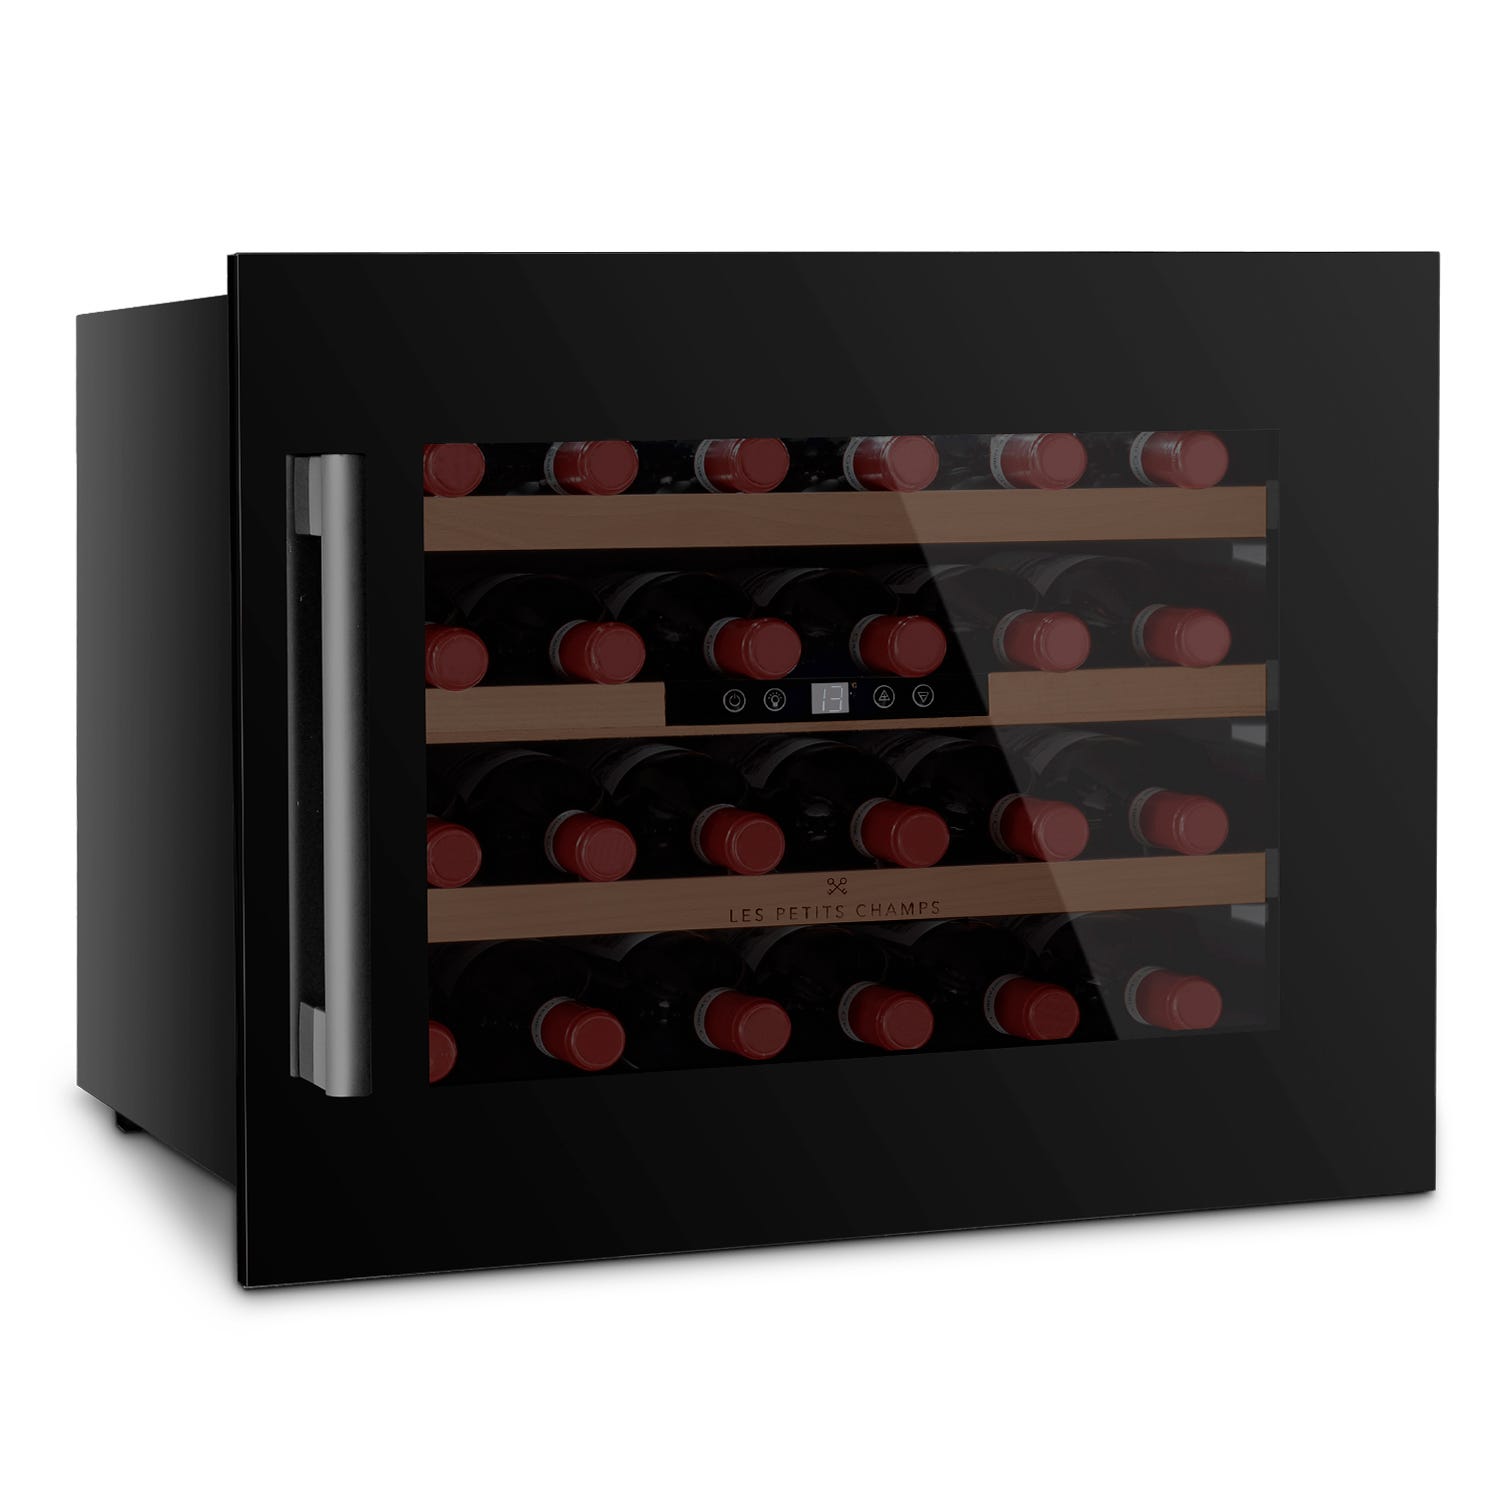 Vinoteca integrable Teka para 24 botellas - RVI 10024